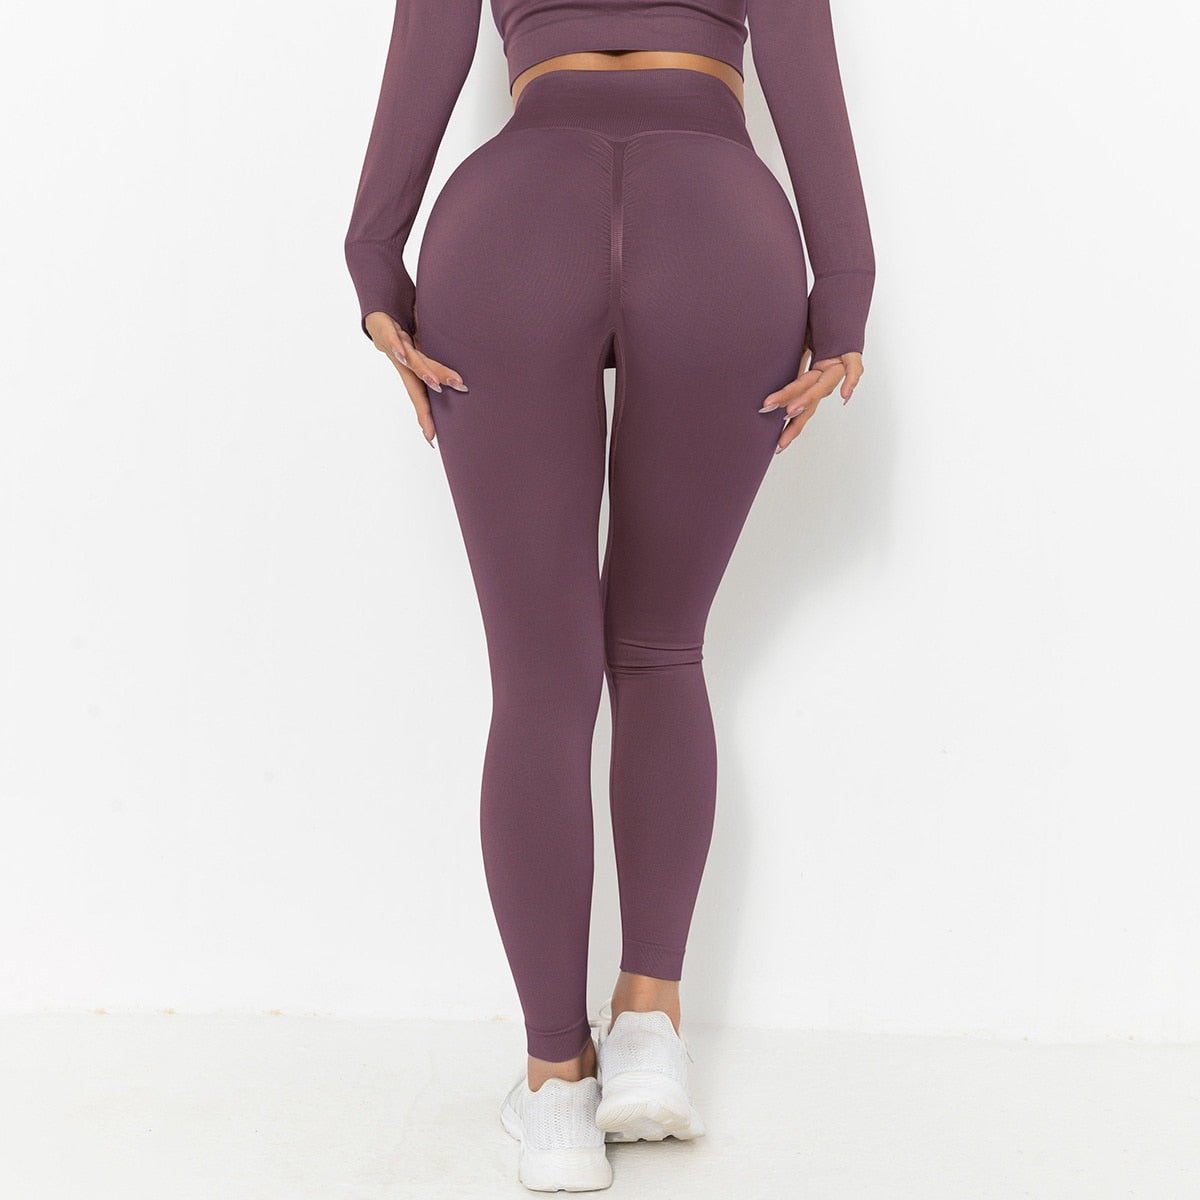 Arch Tights Fitness Leggings Activewear Truetights Purple S 